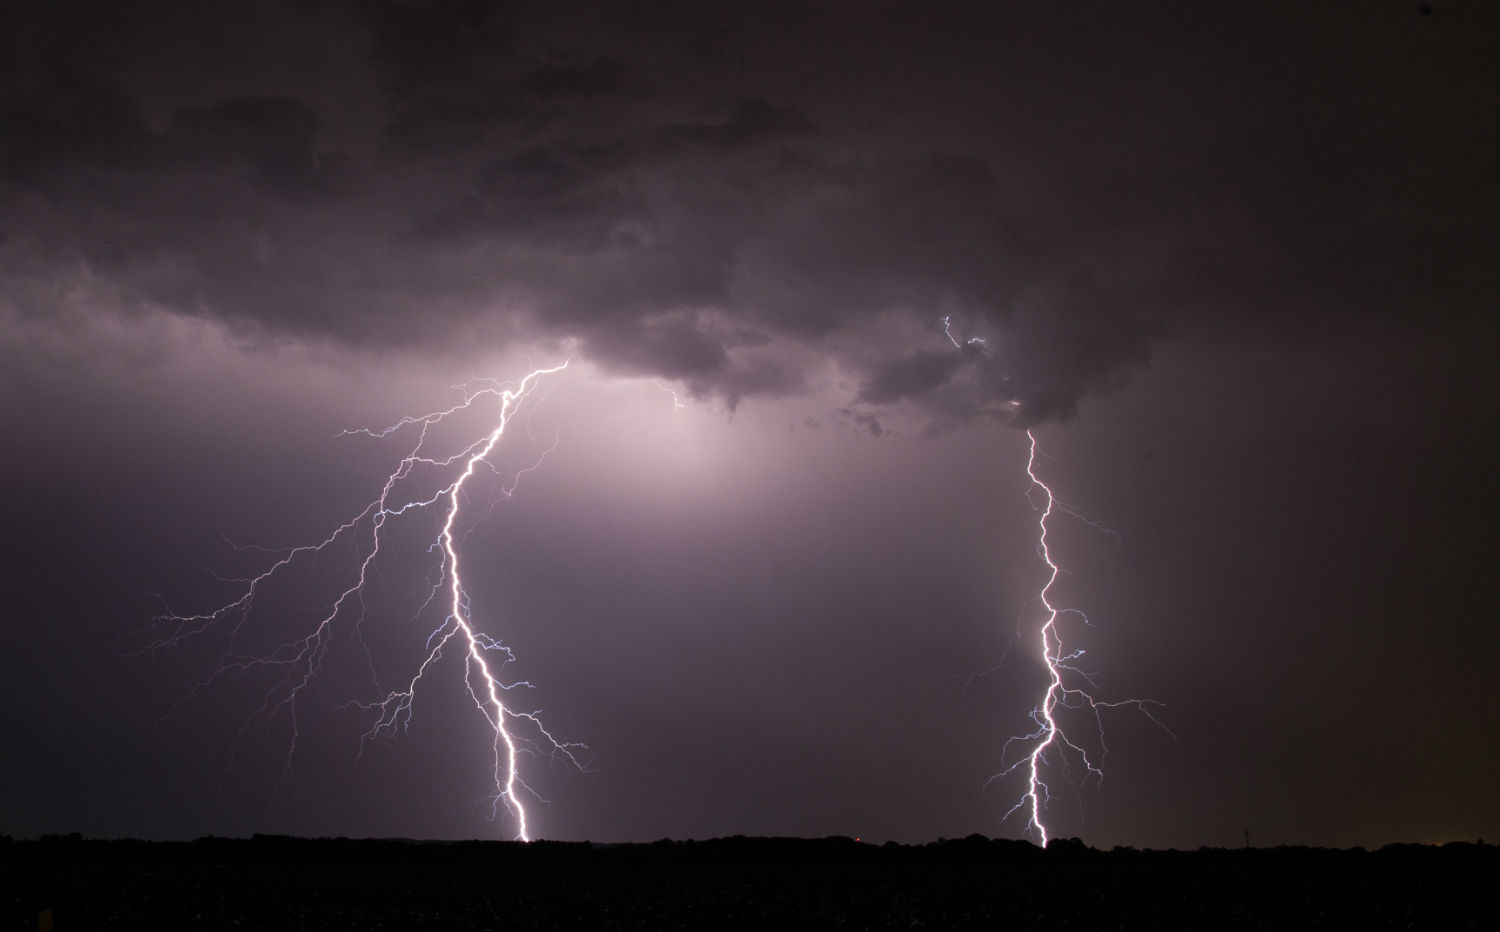 Two bolts of lightning strike in Marl, North Rhine-Westphalia in 2016.